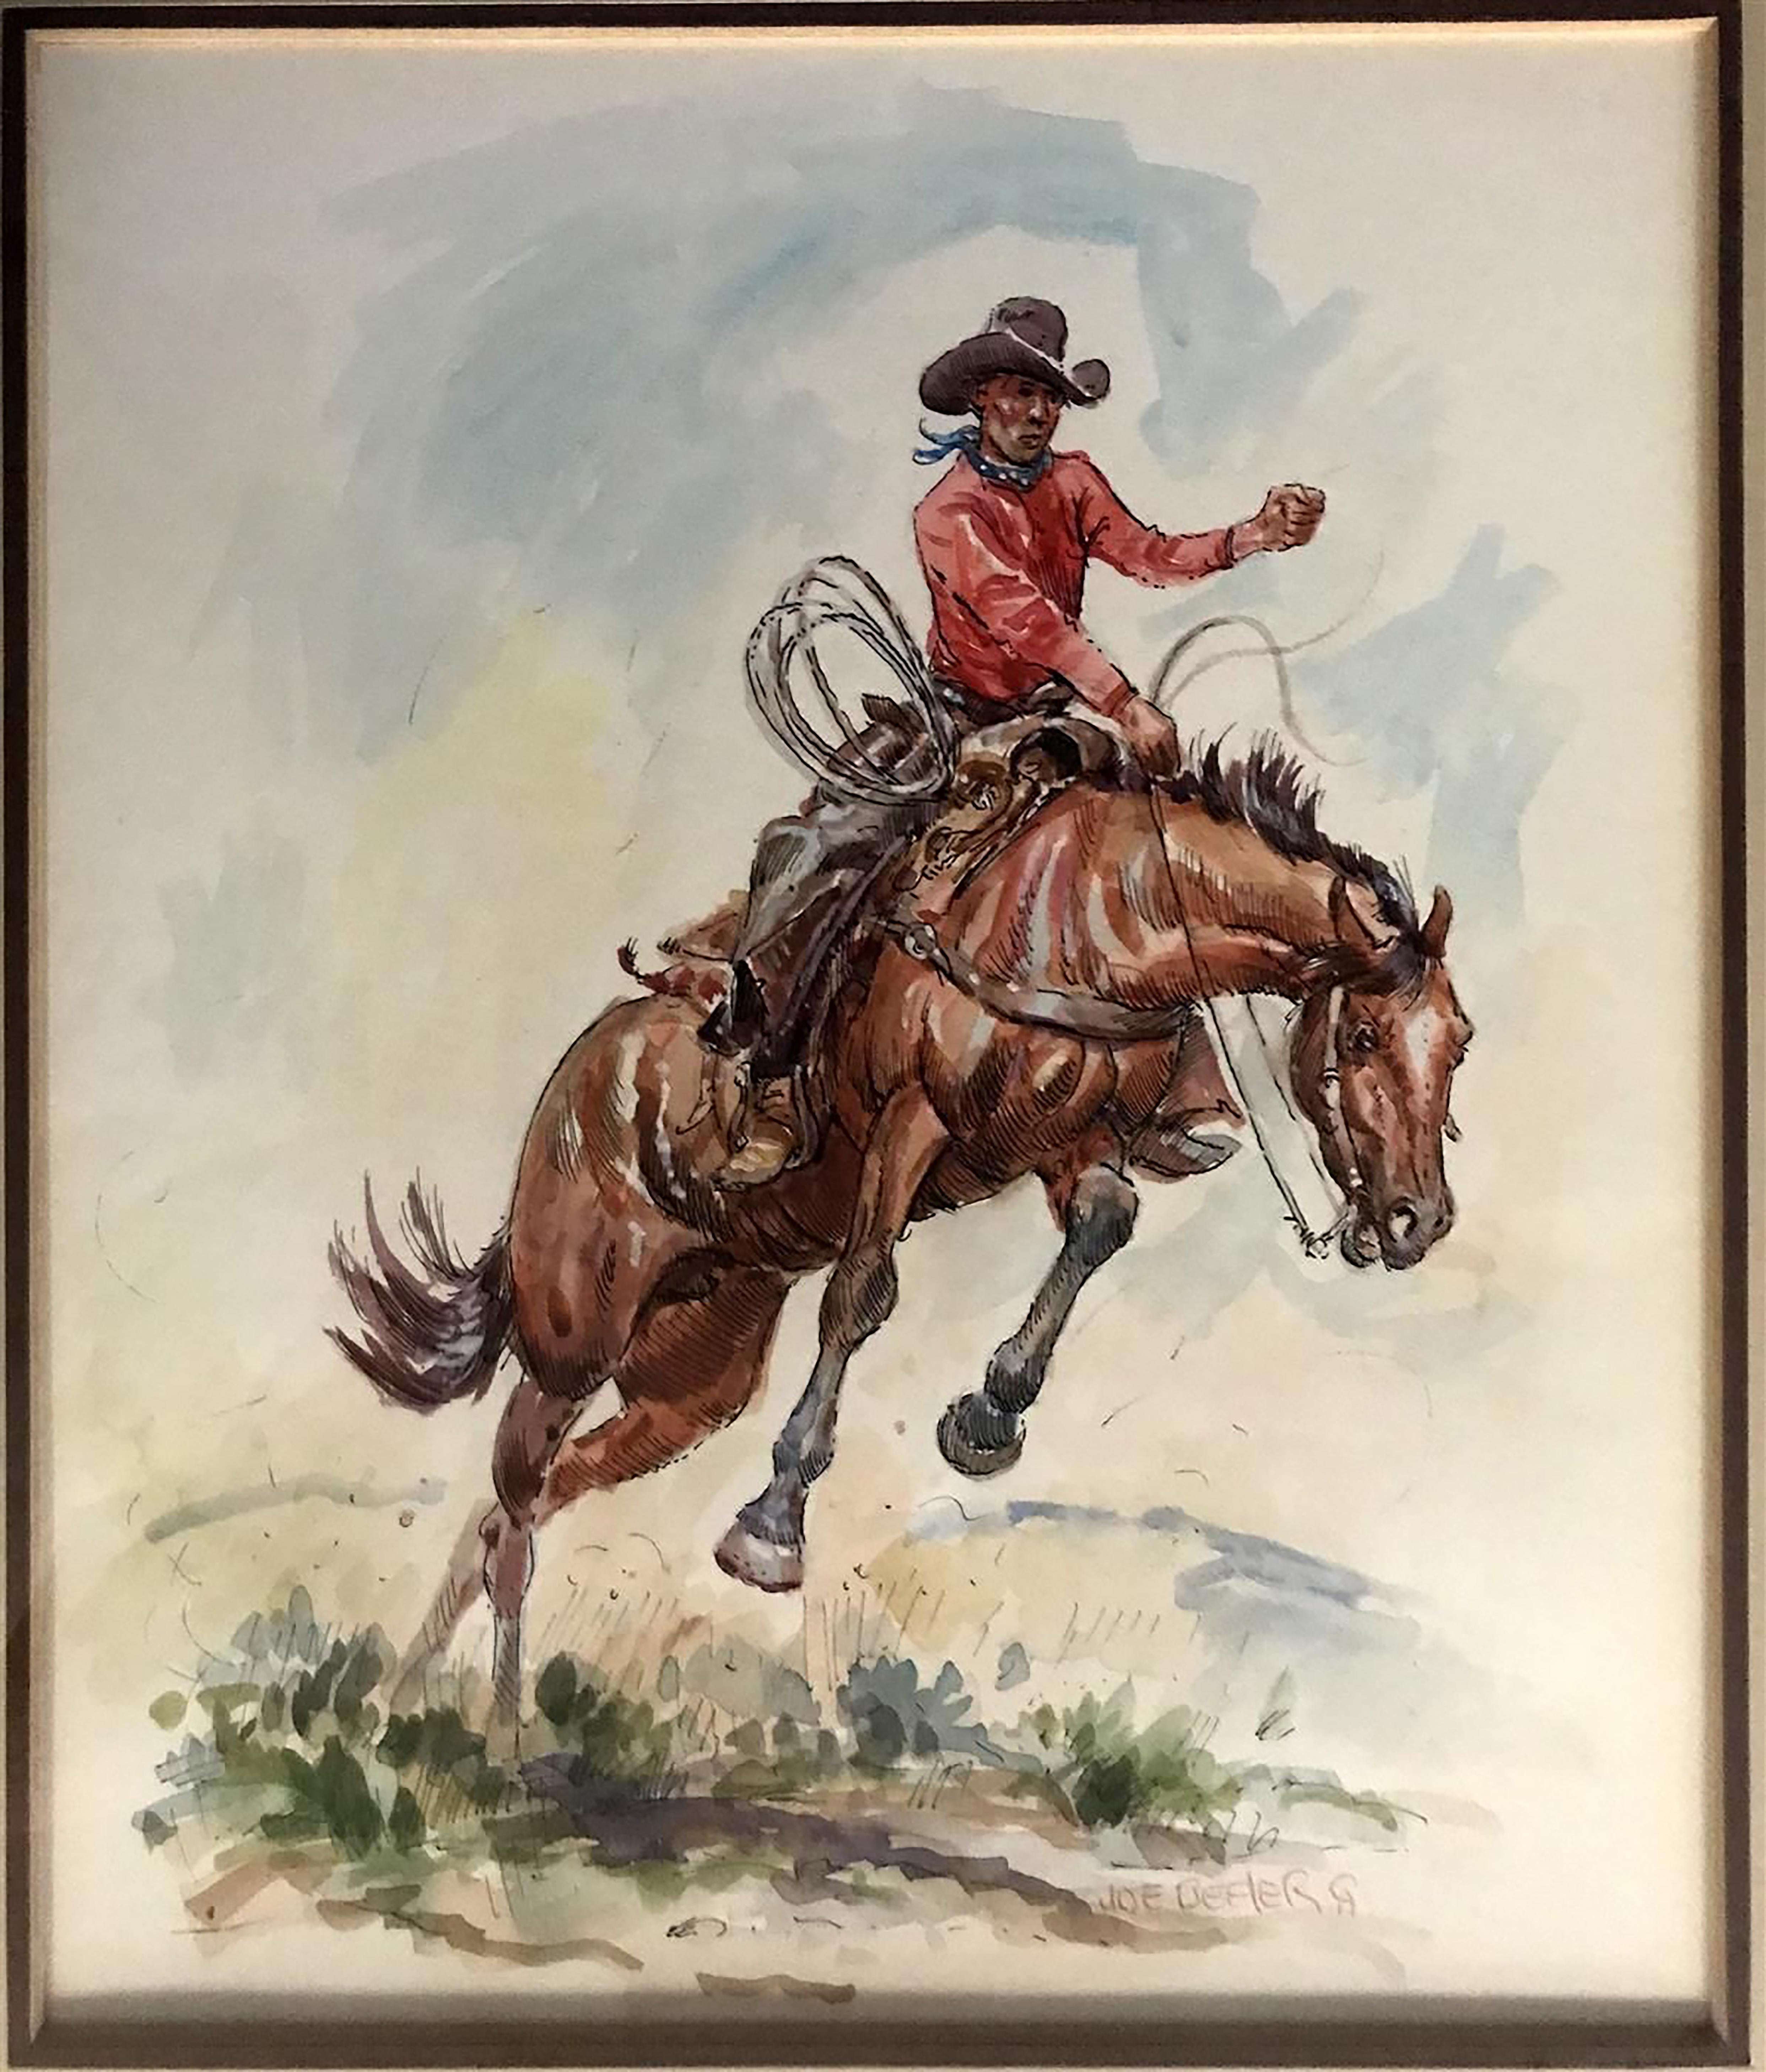 Cowboy on Bucking Horse  - Art by Joe Beeler